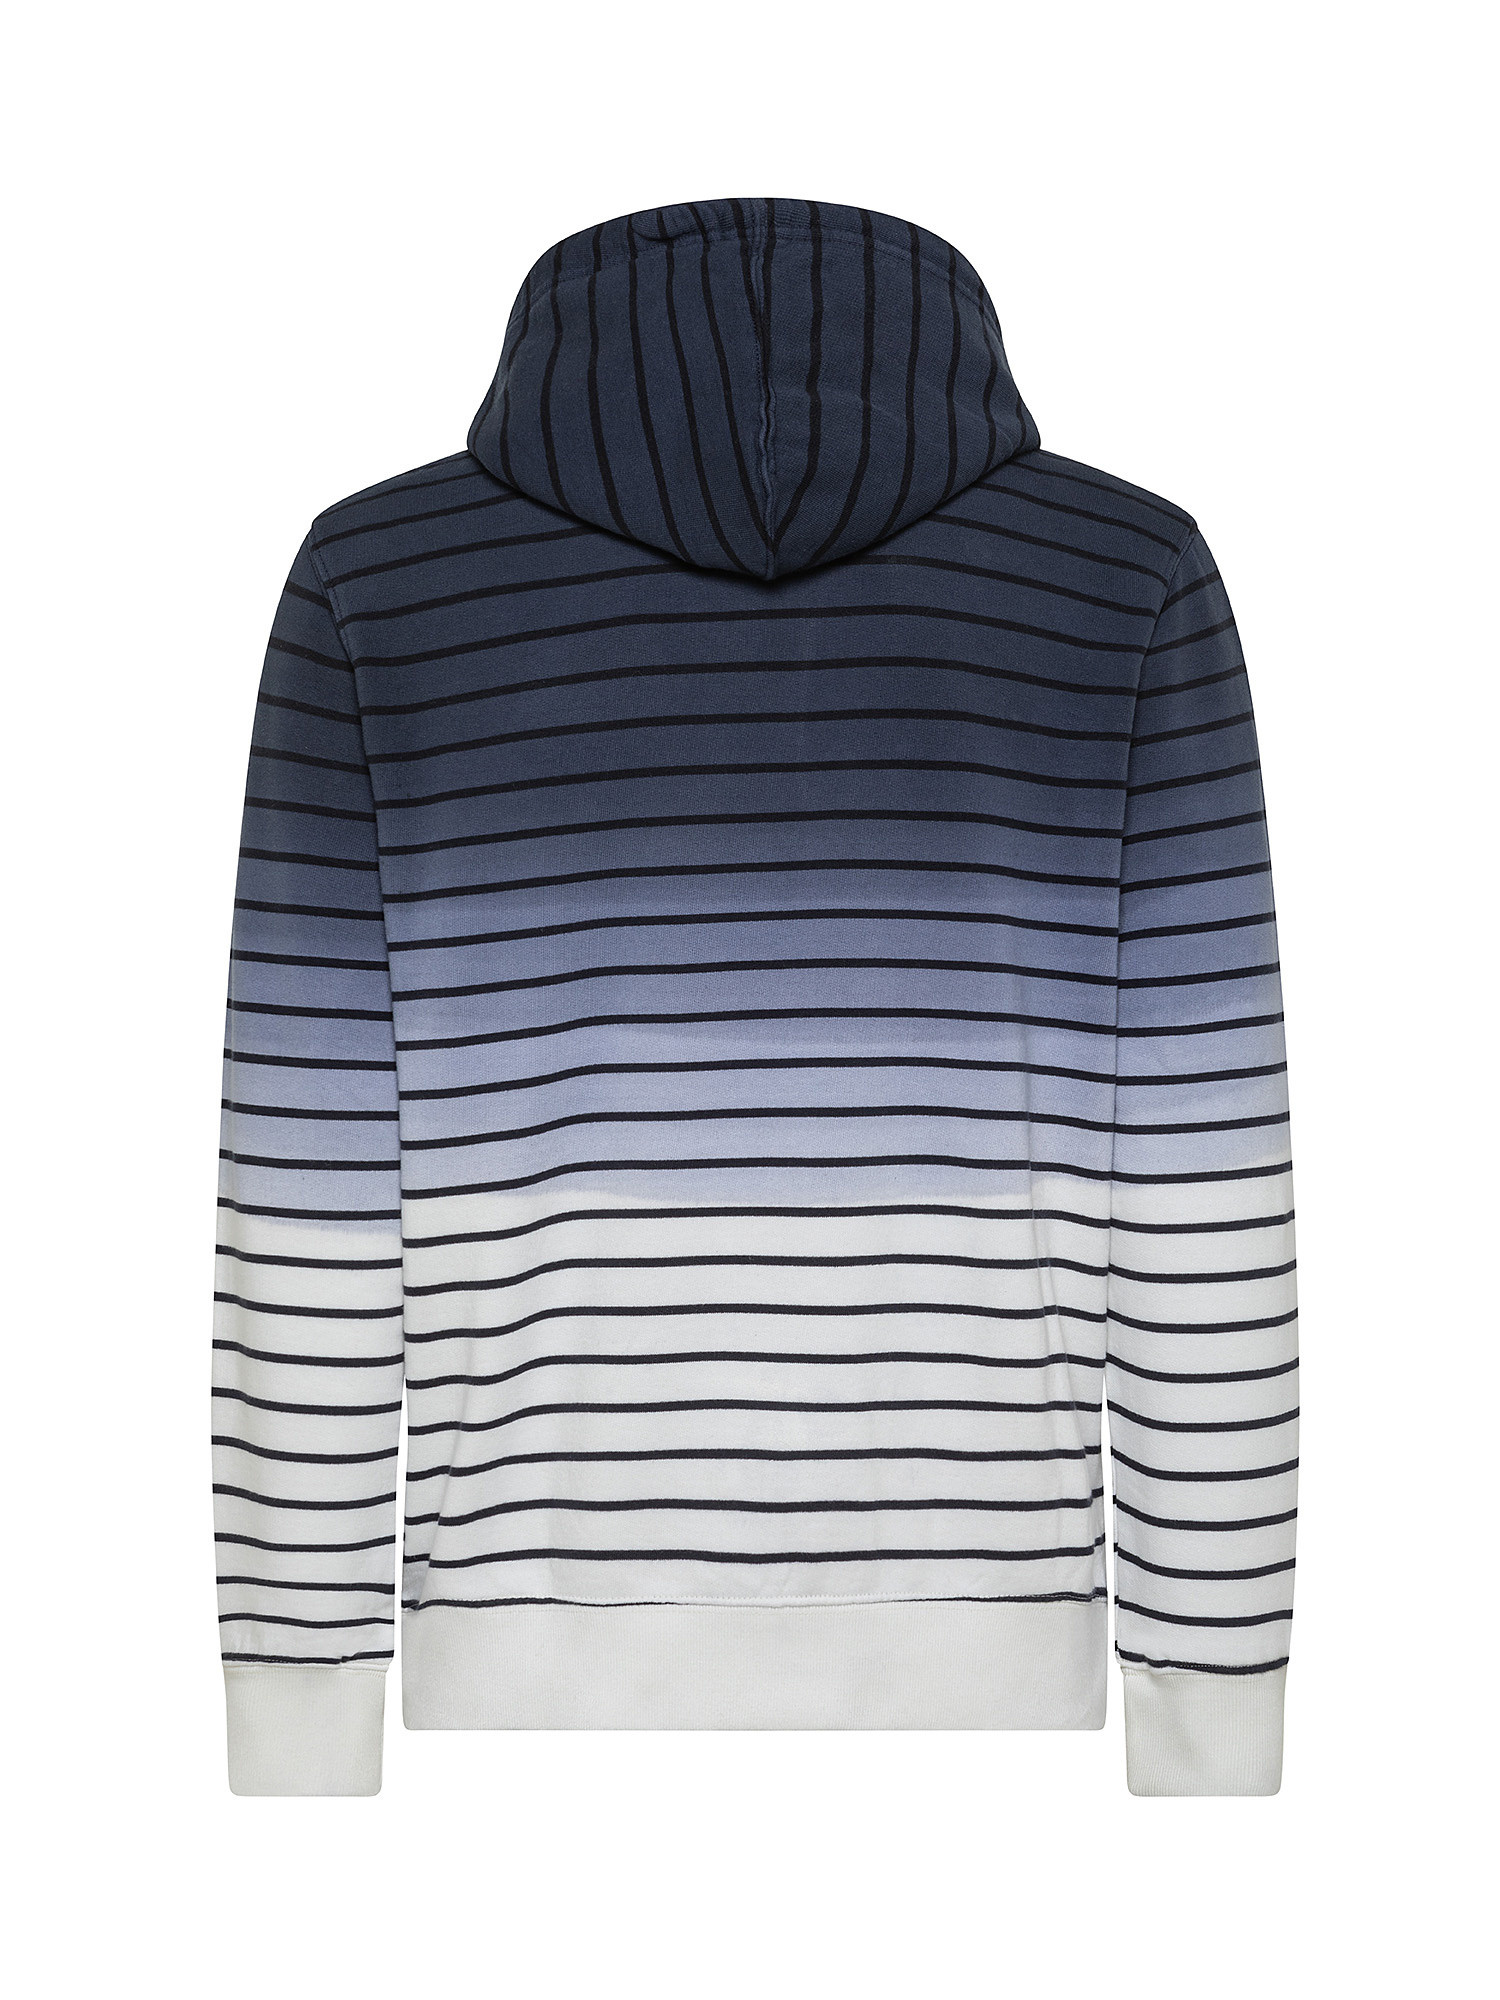 Striped hooded sweatshirt, Dark Blue, large image number 1